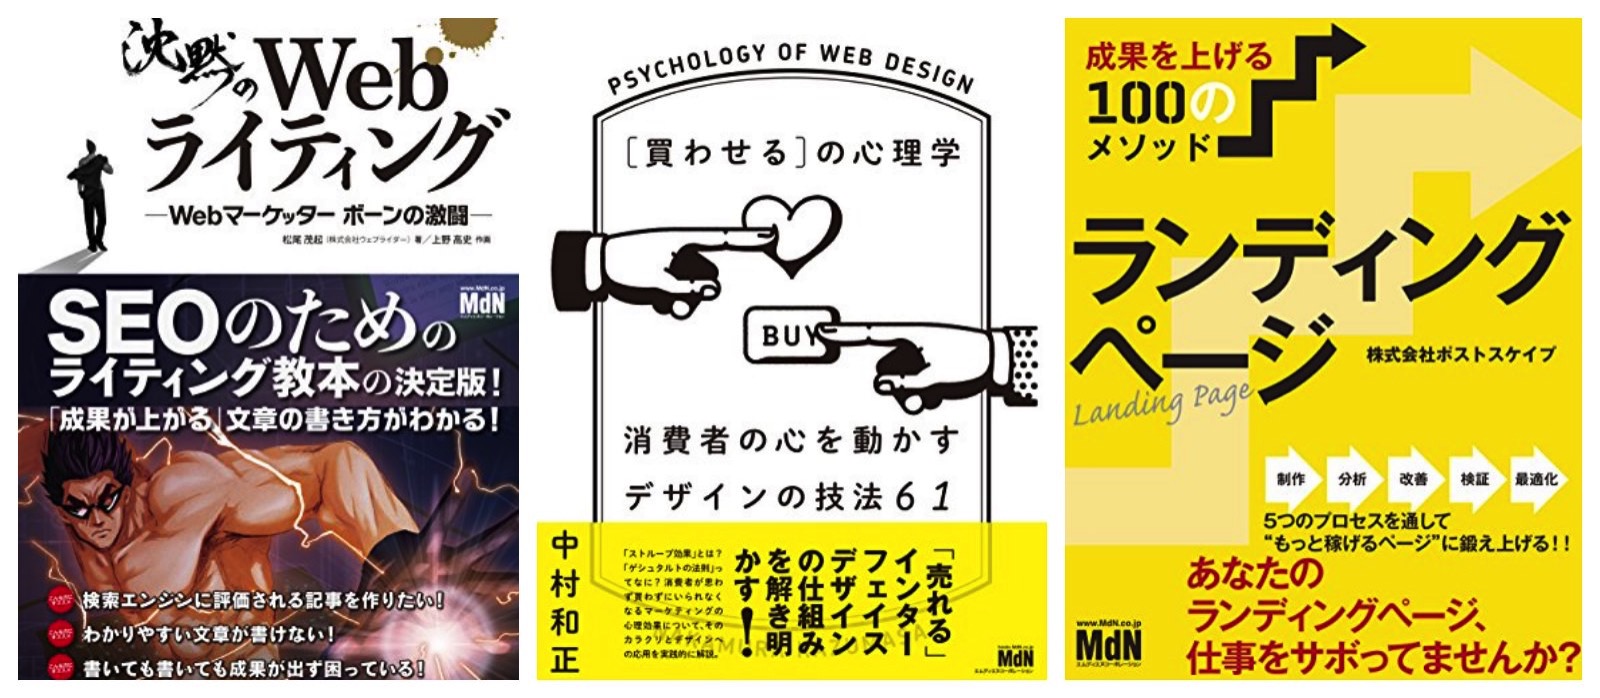 Kindle-Web-Design-Book-Sale.jpg